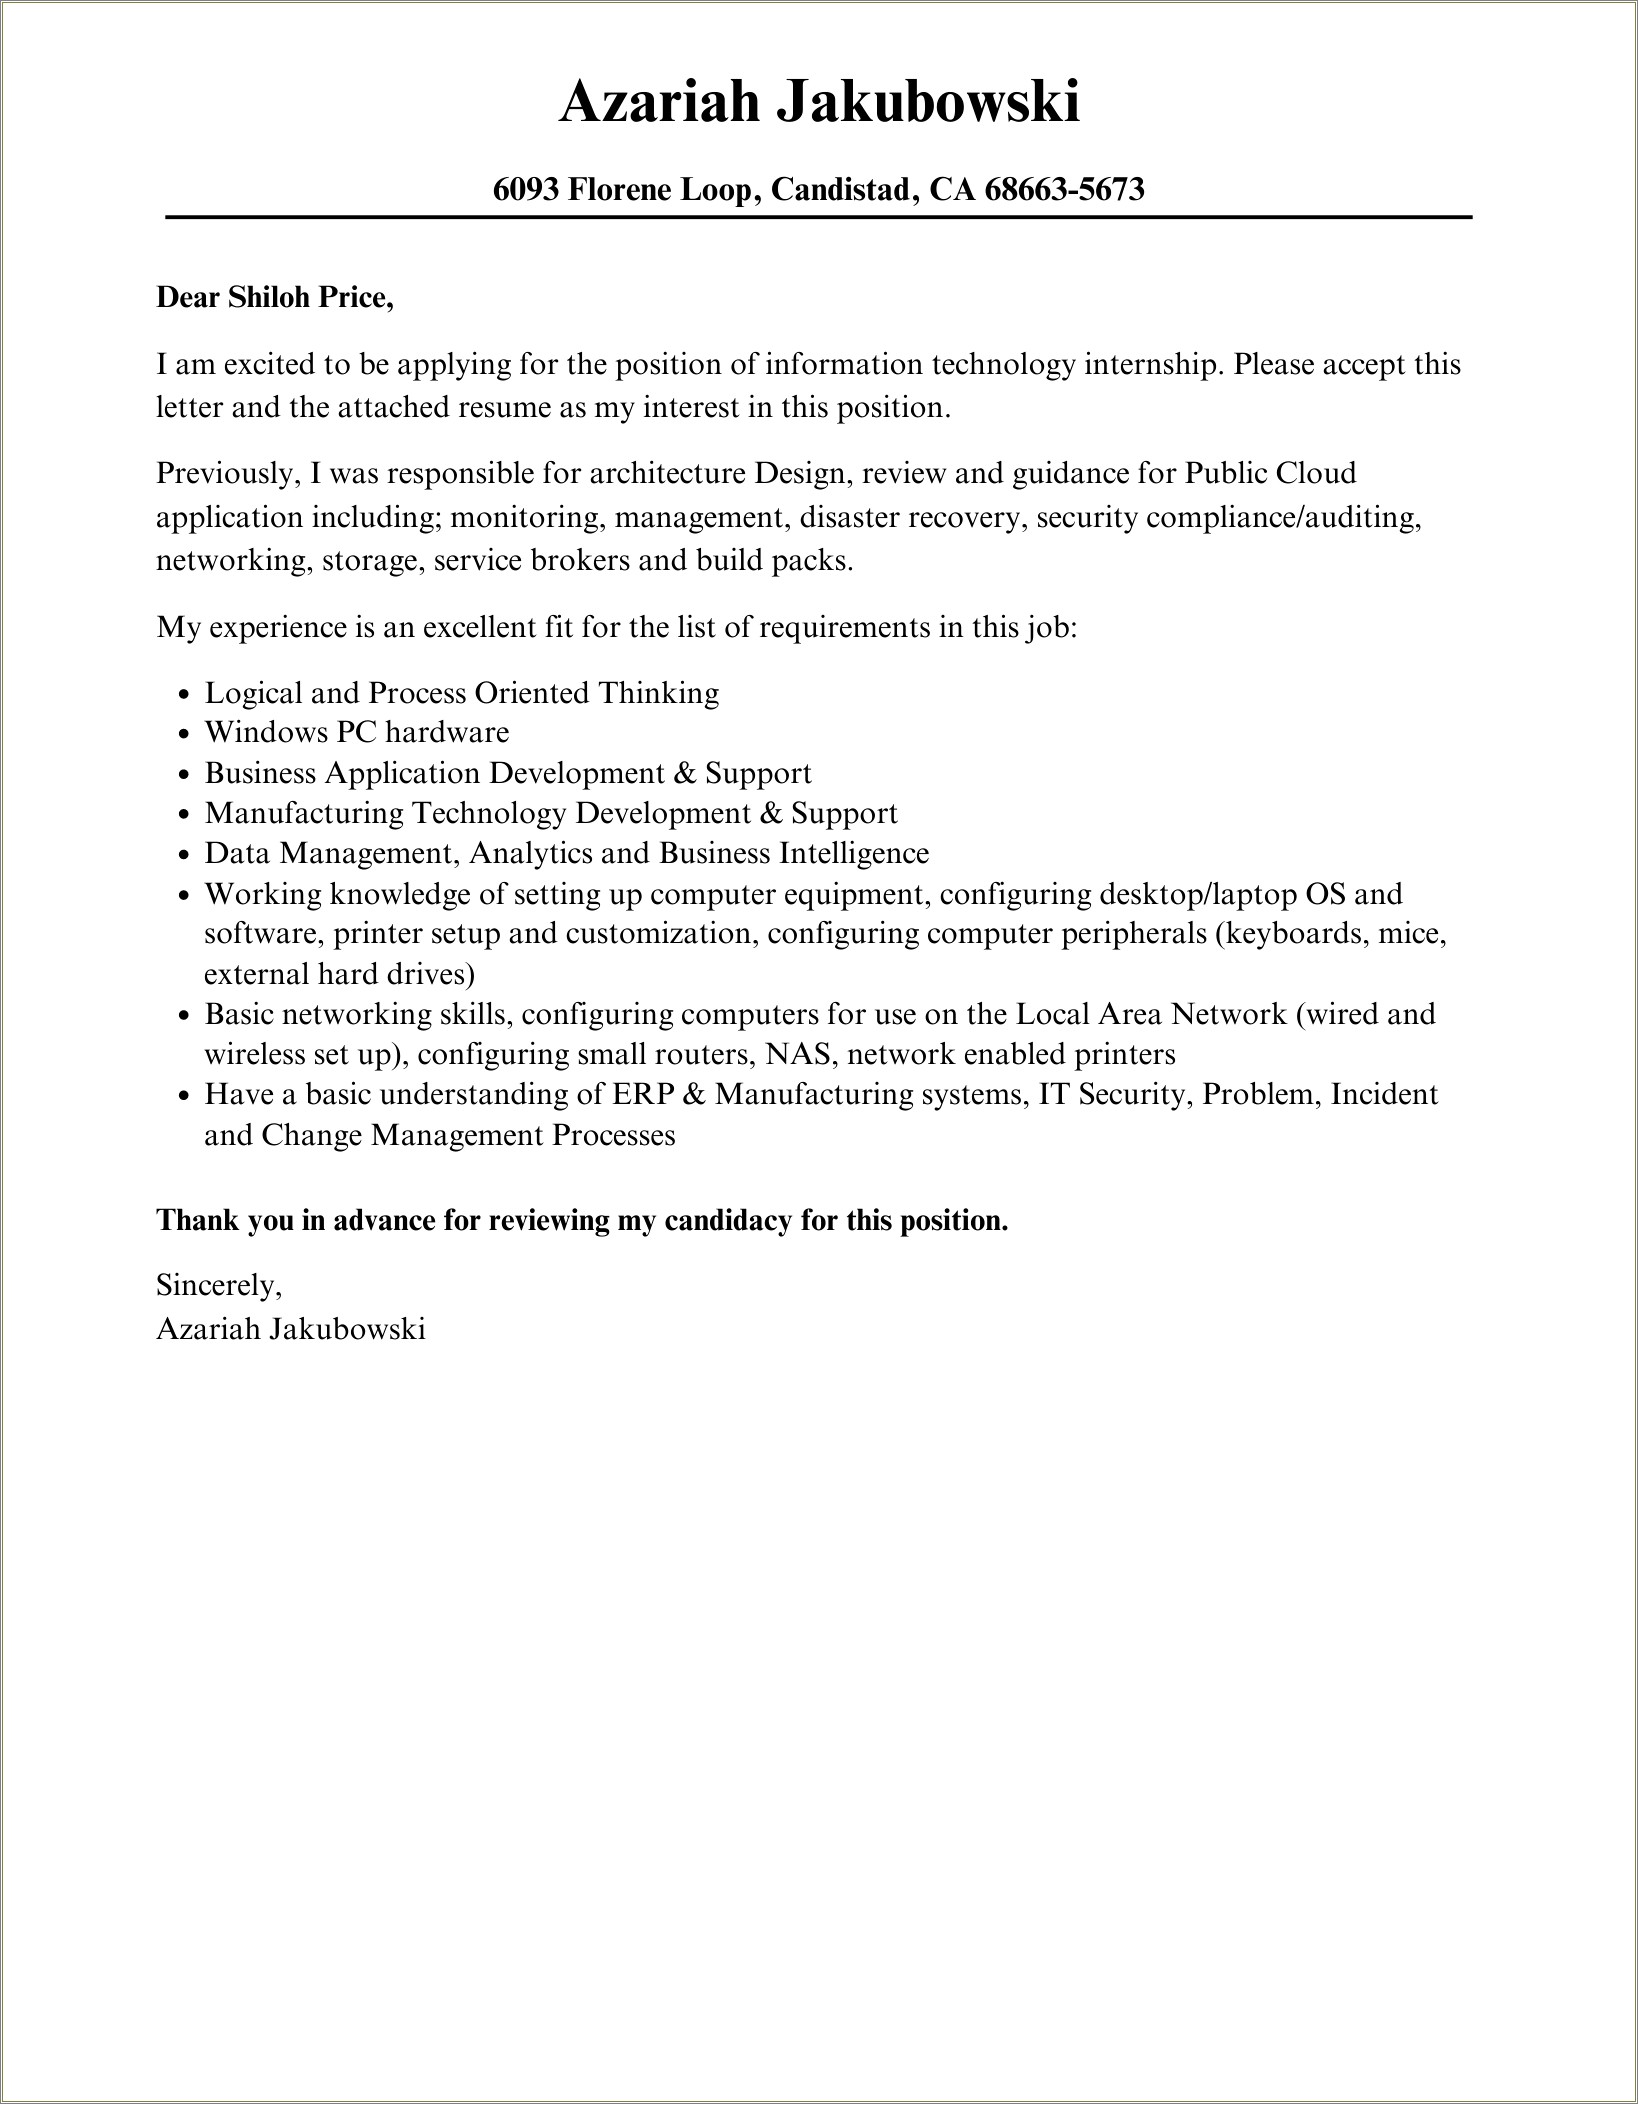 Resume Cover Letter Samples For Information Technology